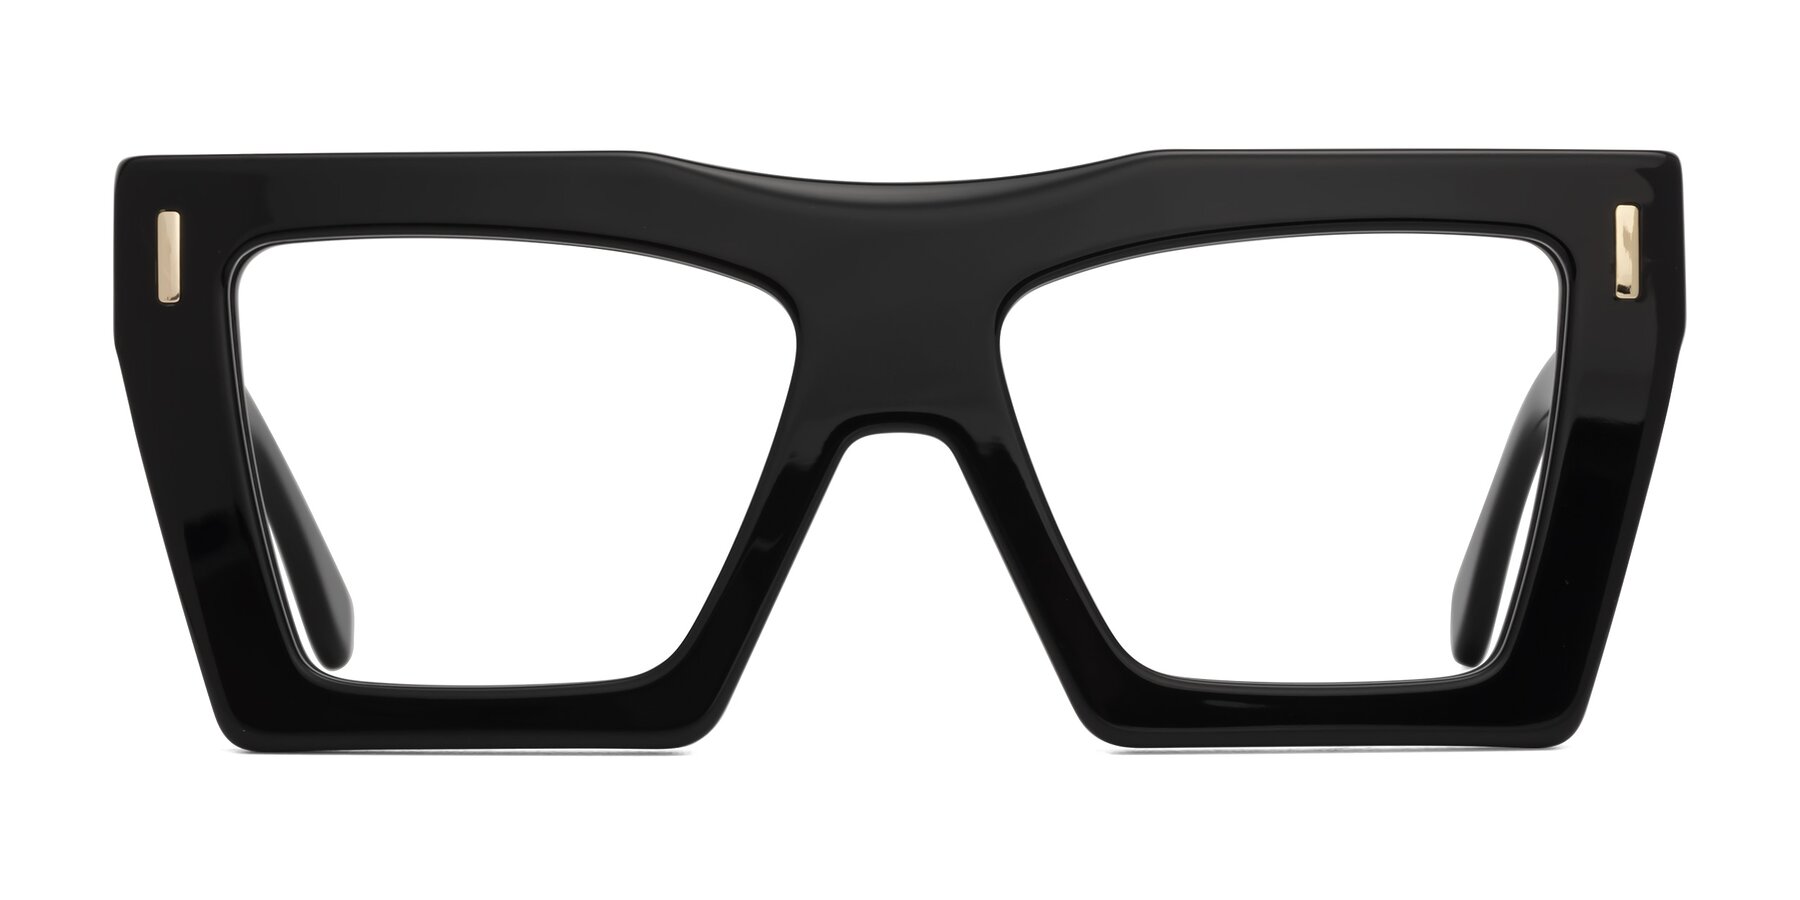 Tree - Black Sunglasses Frame